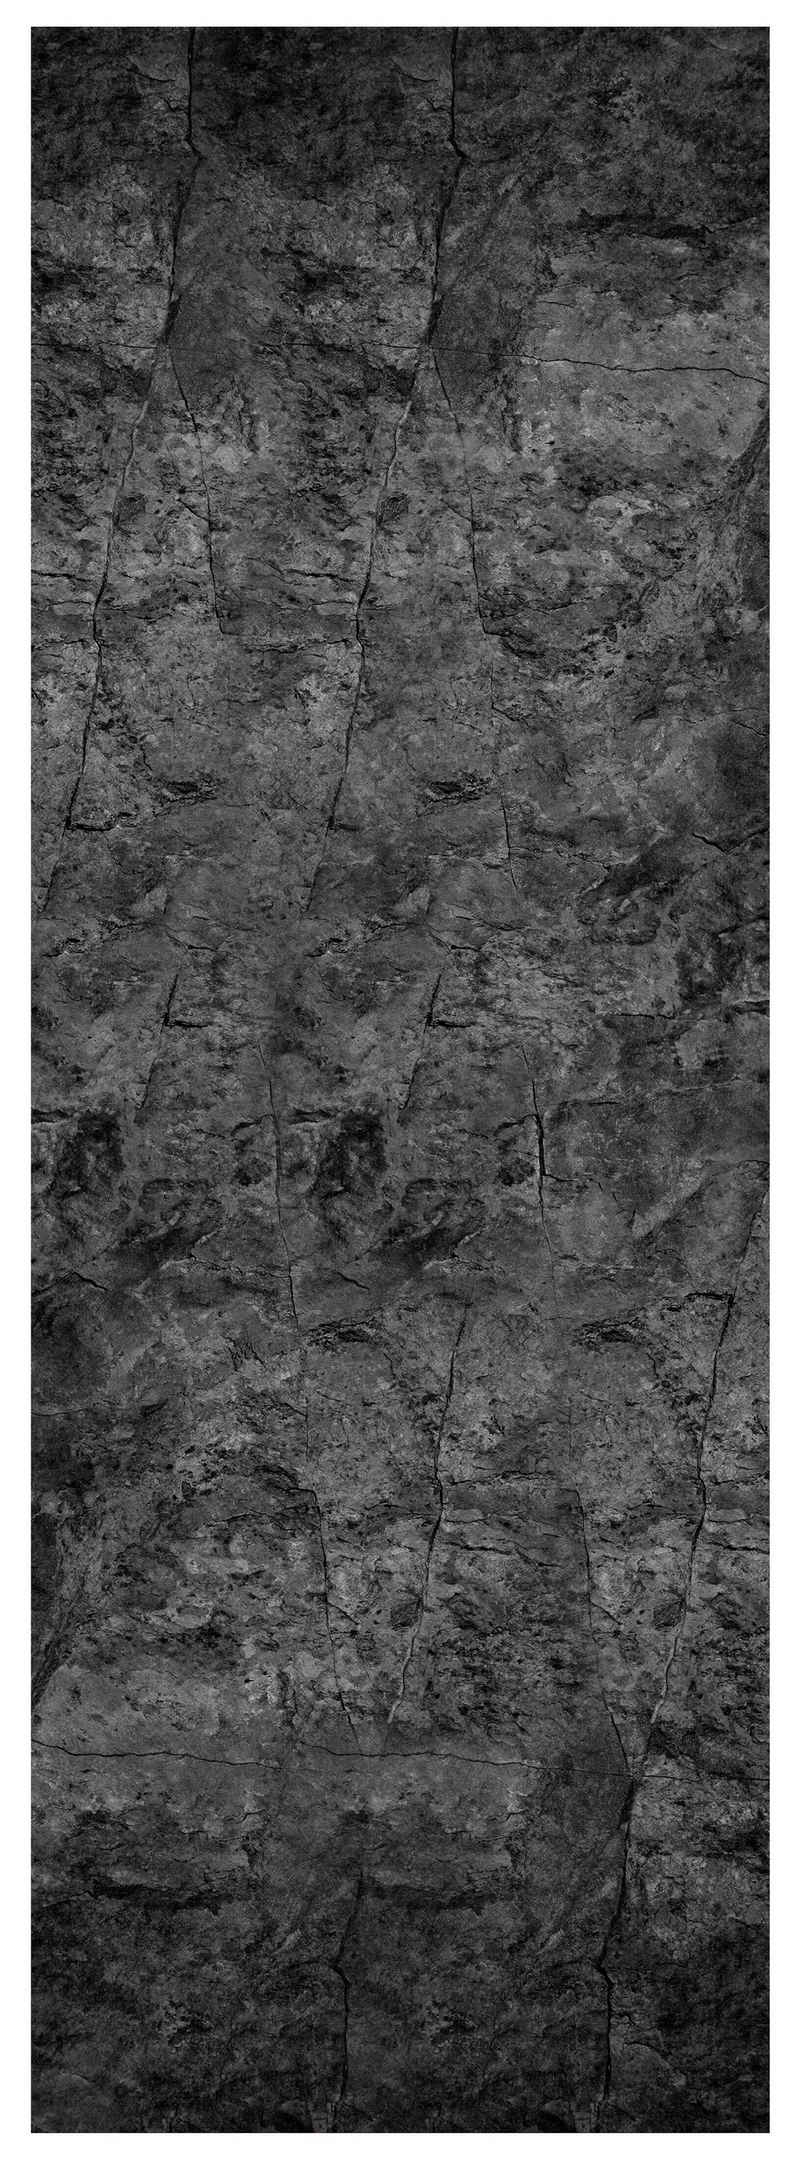 wandmotiv24 Türtapete schwarze Steinmauer, Risse, dunkel, glatt, Fototapete, Wandtapete, Motivtapete, matt, selbstklebende Dekorfolie